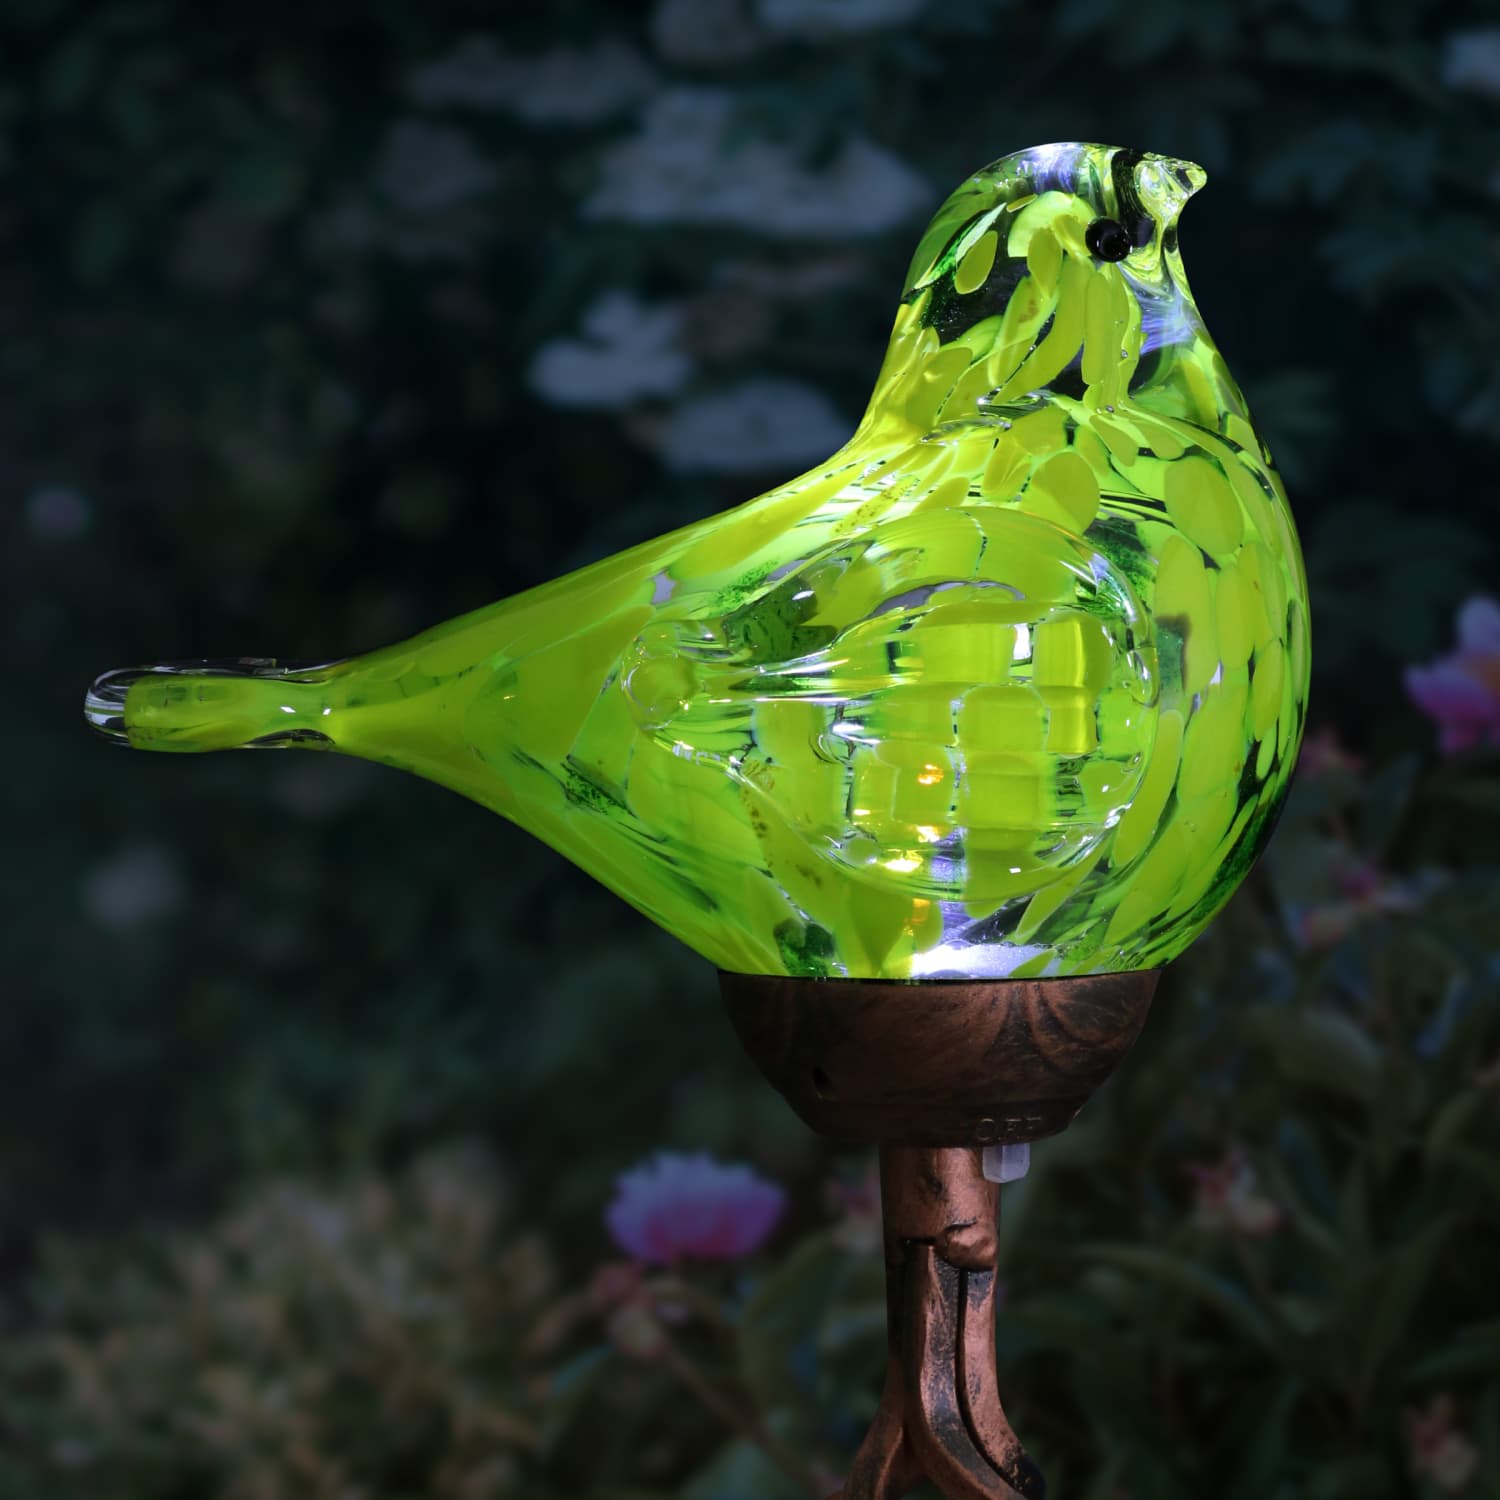 Solar Hand Blown Glass Bird Garden Stake in Yellow, 6 by 31 Inches | Shop Garden Decor by Exhart